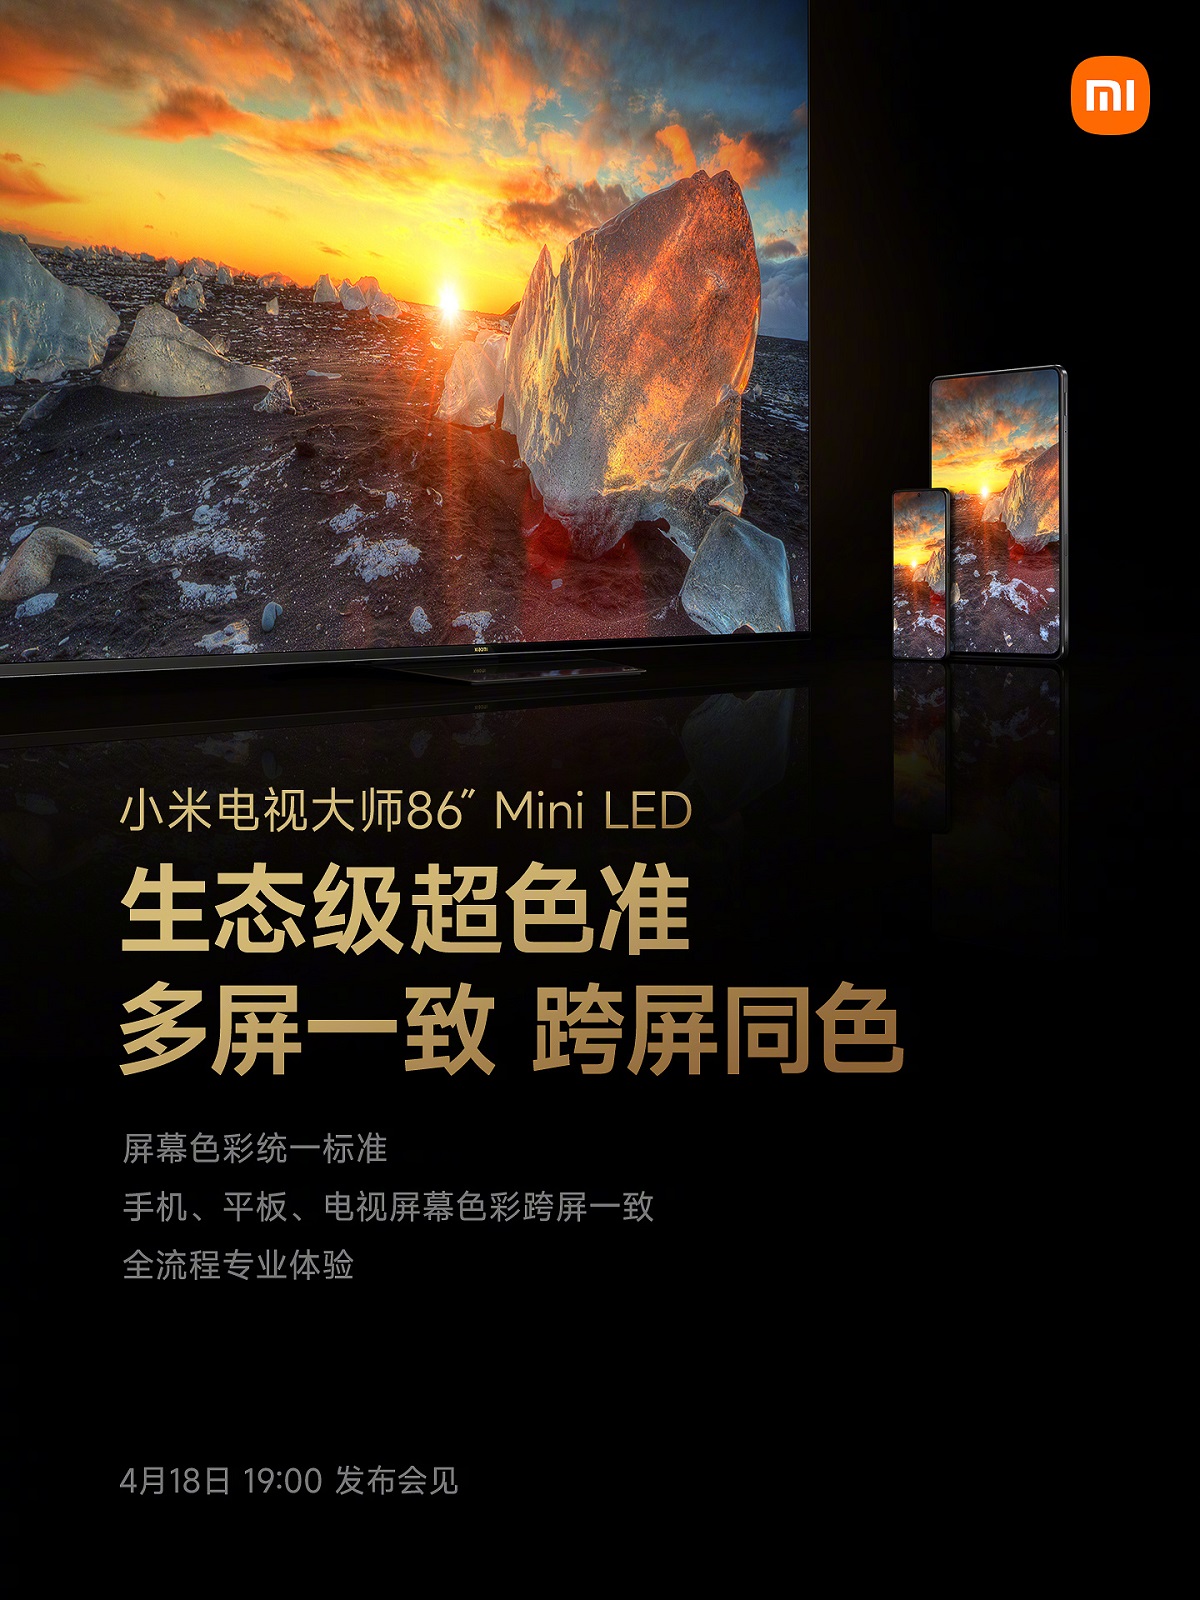 Xiaomi Master 86 Mini LED